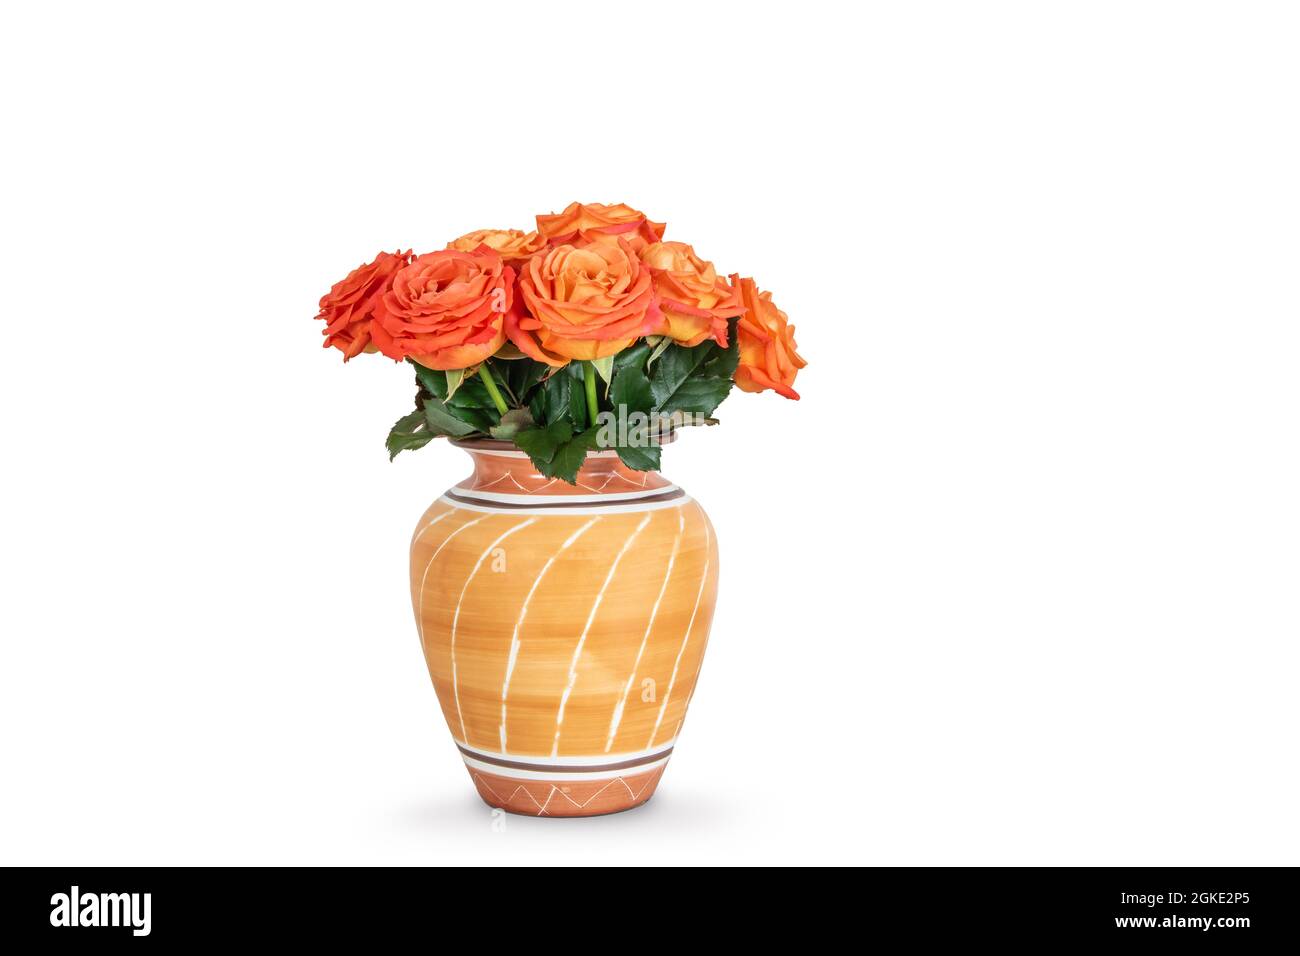 Bouquet of orange roses in vase, isolated on white background. Stock Photo